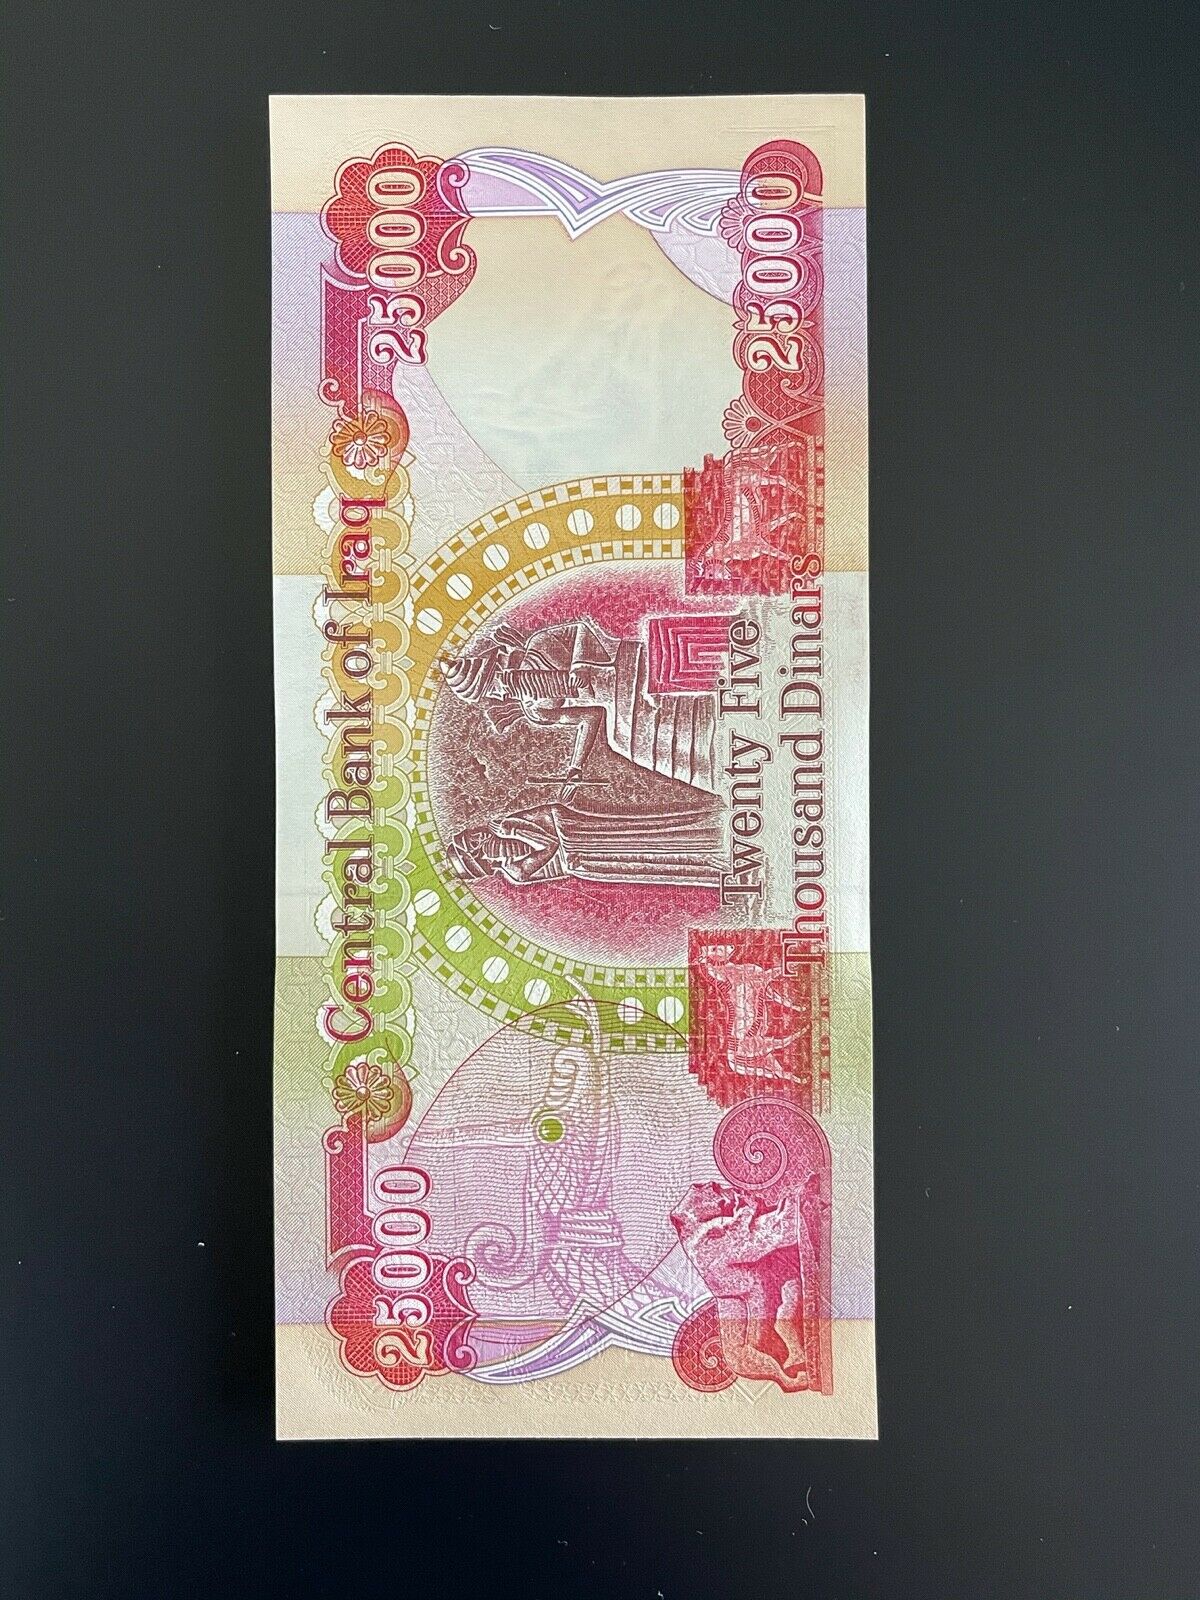 25000 New Iraqi Dinar Uncirculated Iqd - Authentic 25k & Verified Iraq Currency